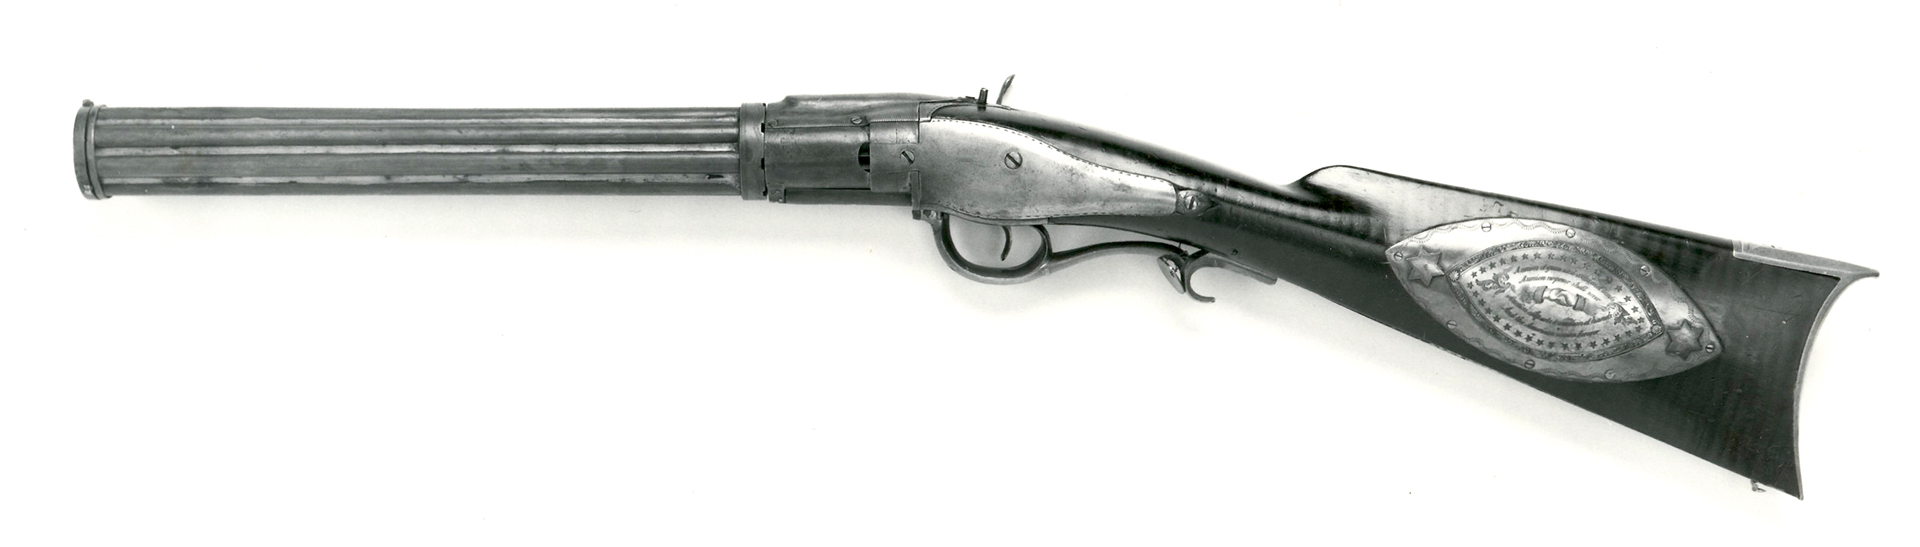 Lorenzo Sibert 48-shot repeating carbine VIRGINIA PACIFICATOR gun left-side view on white background